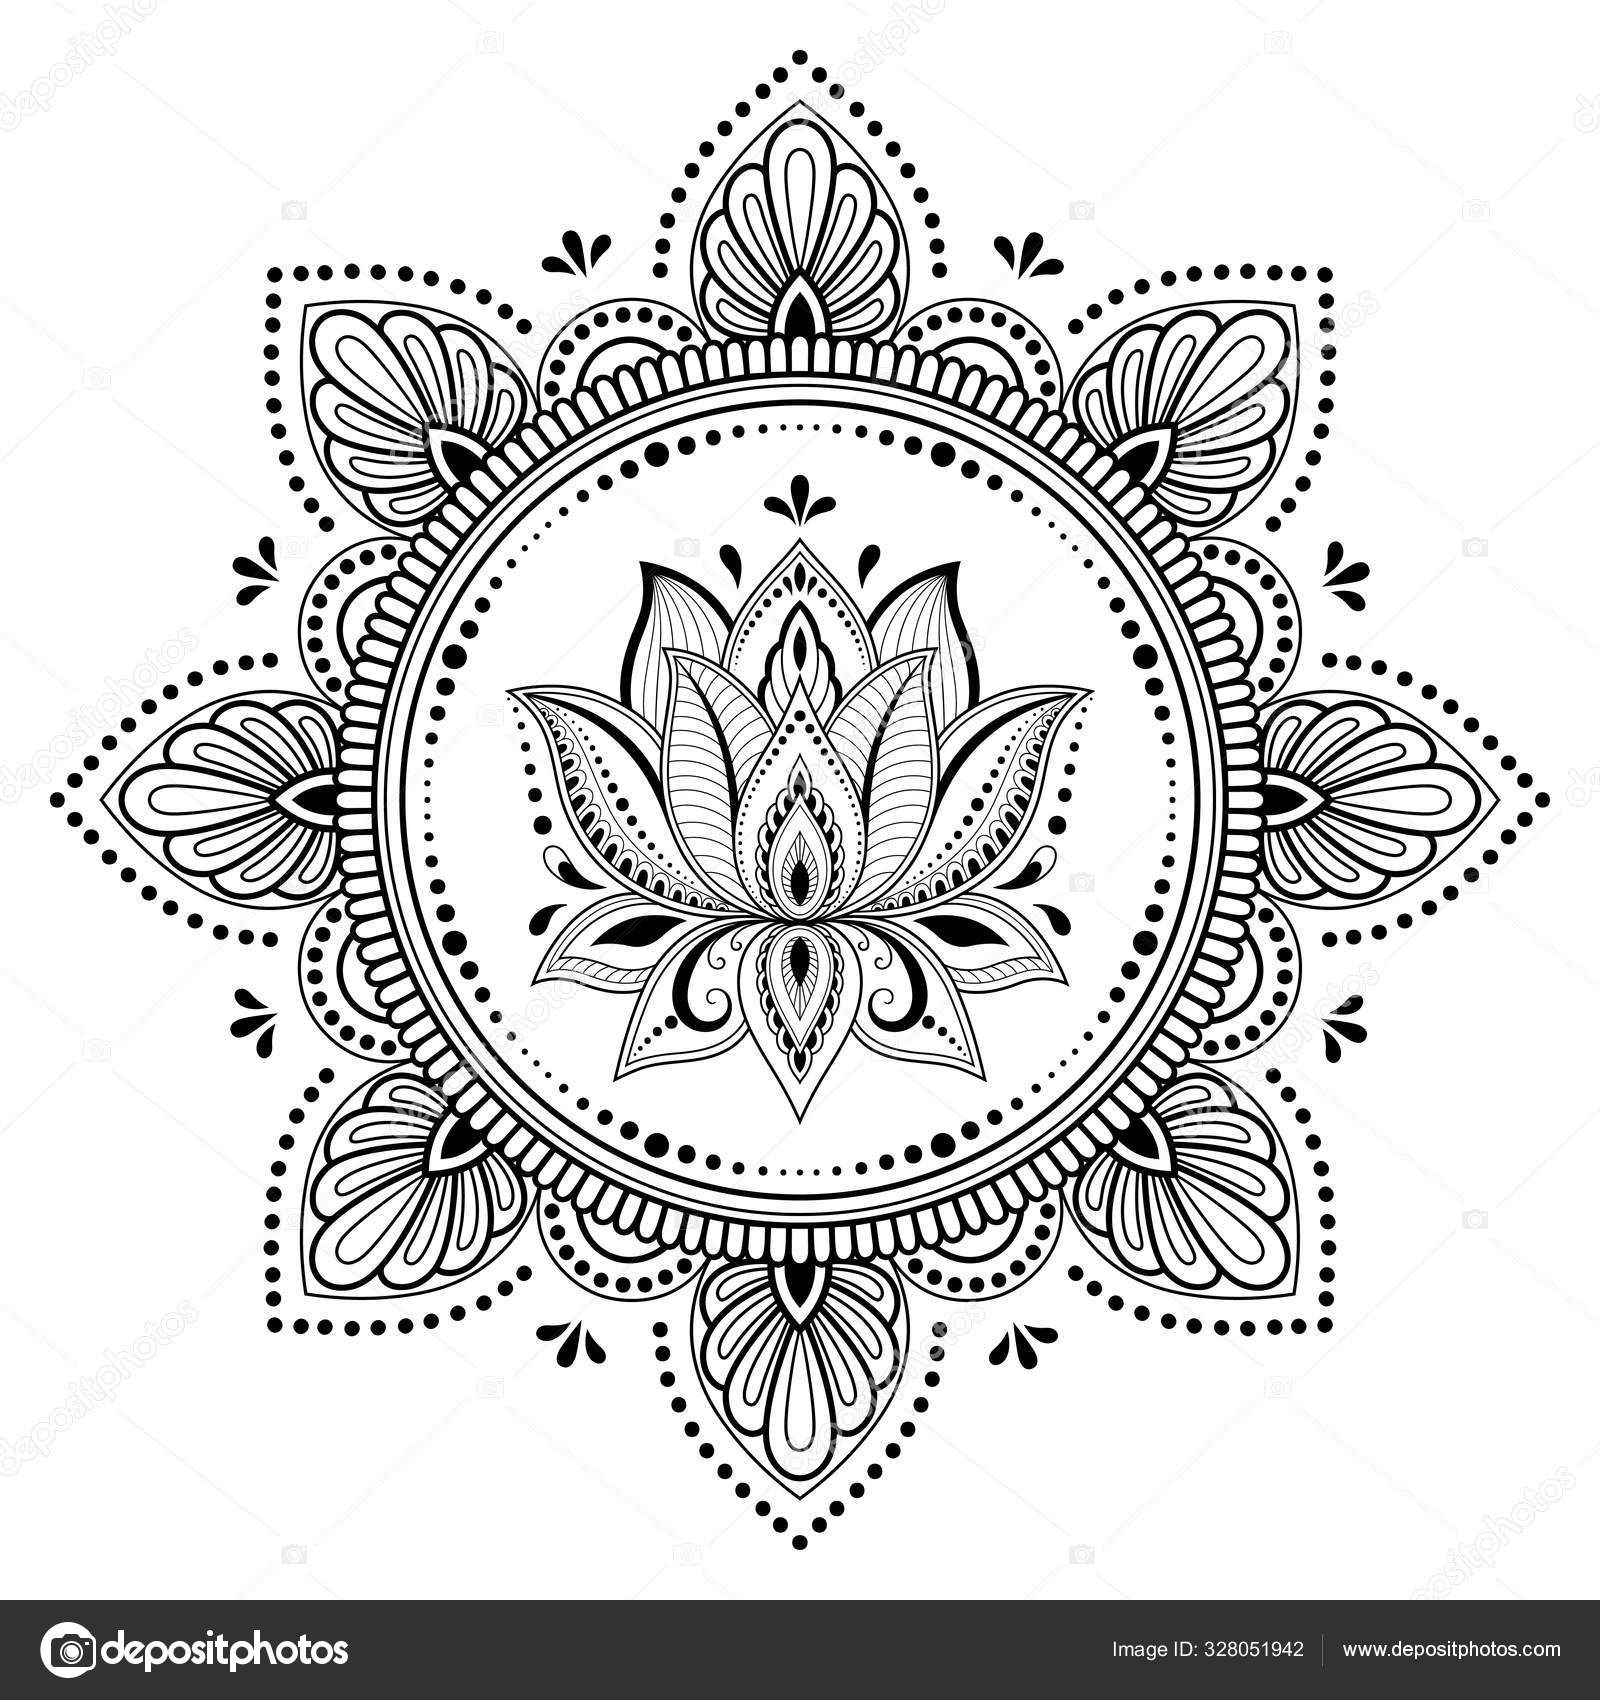 Mandalas ethnic style decorative lotus flower Vector Image